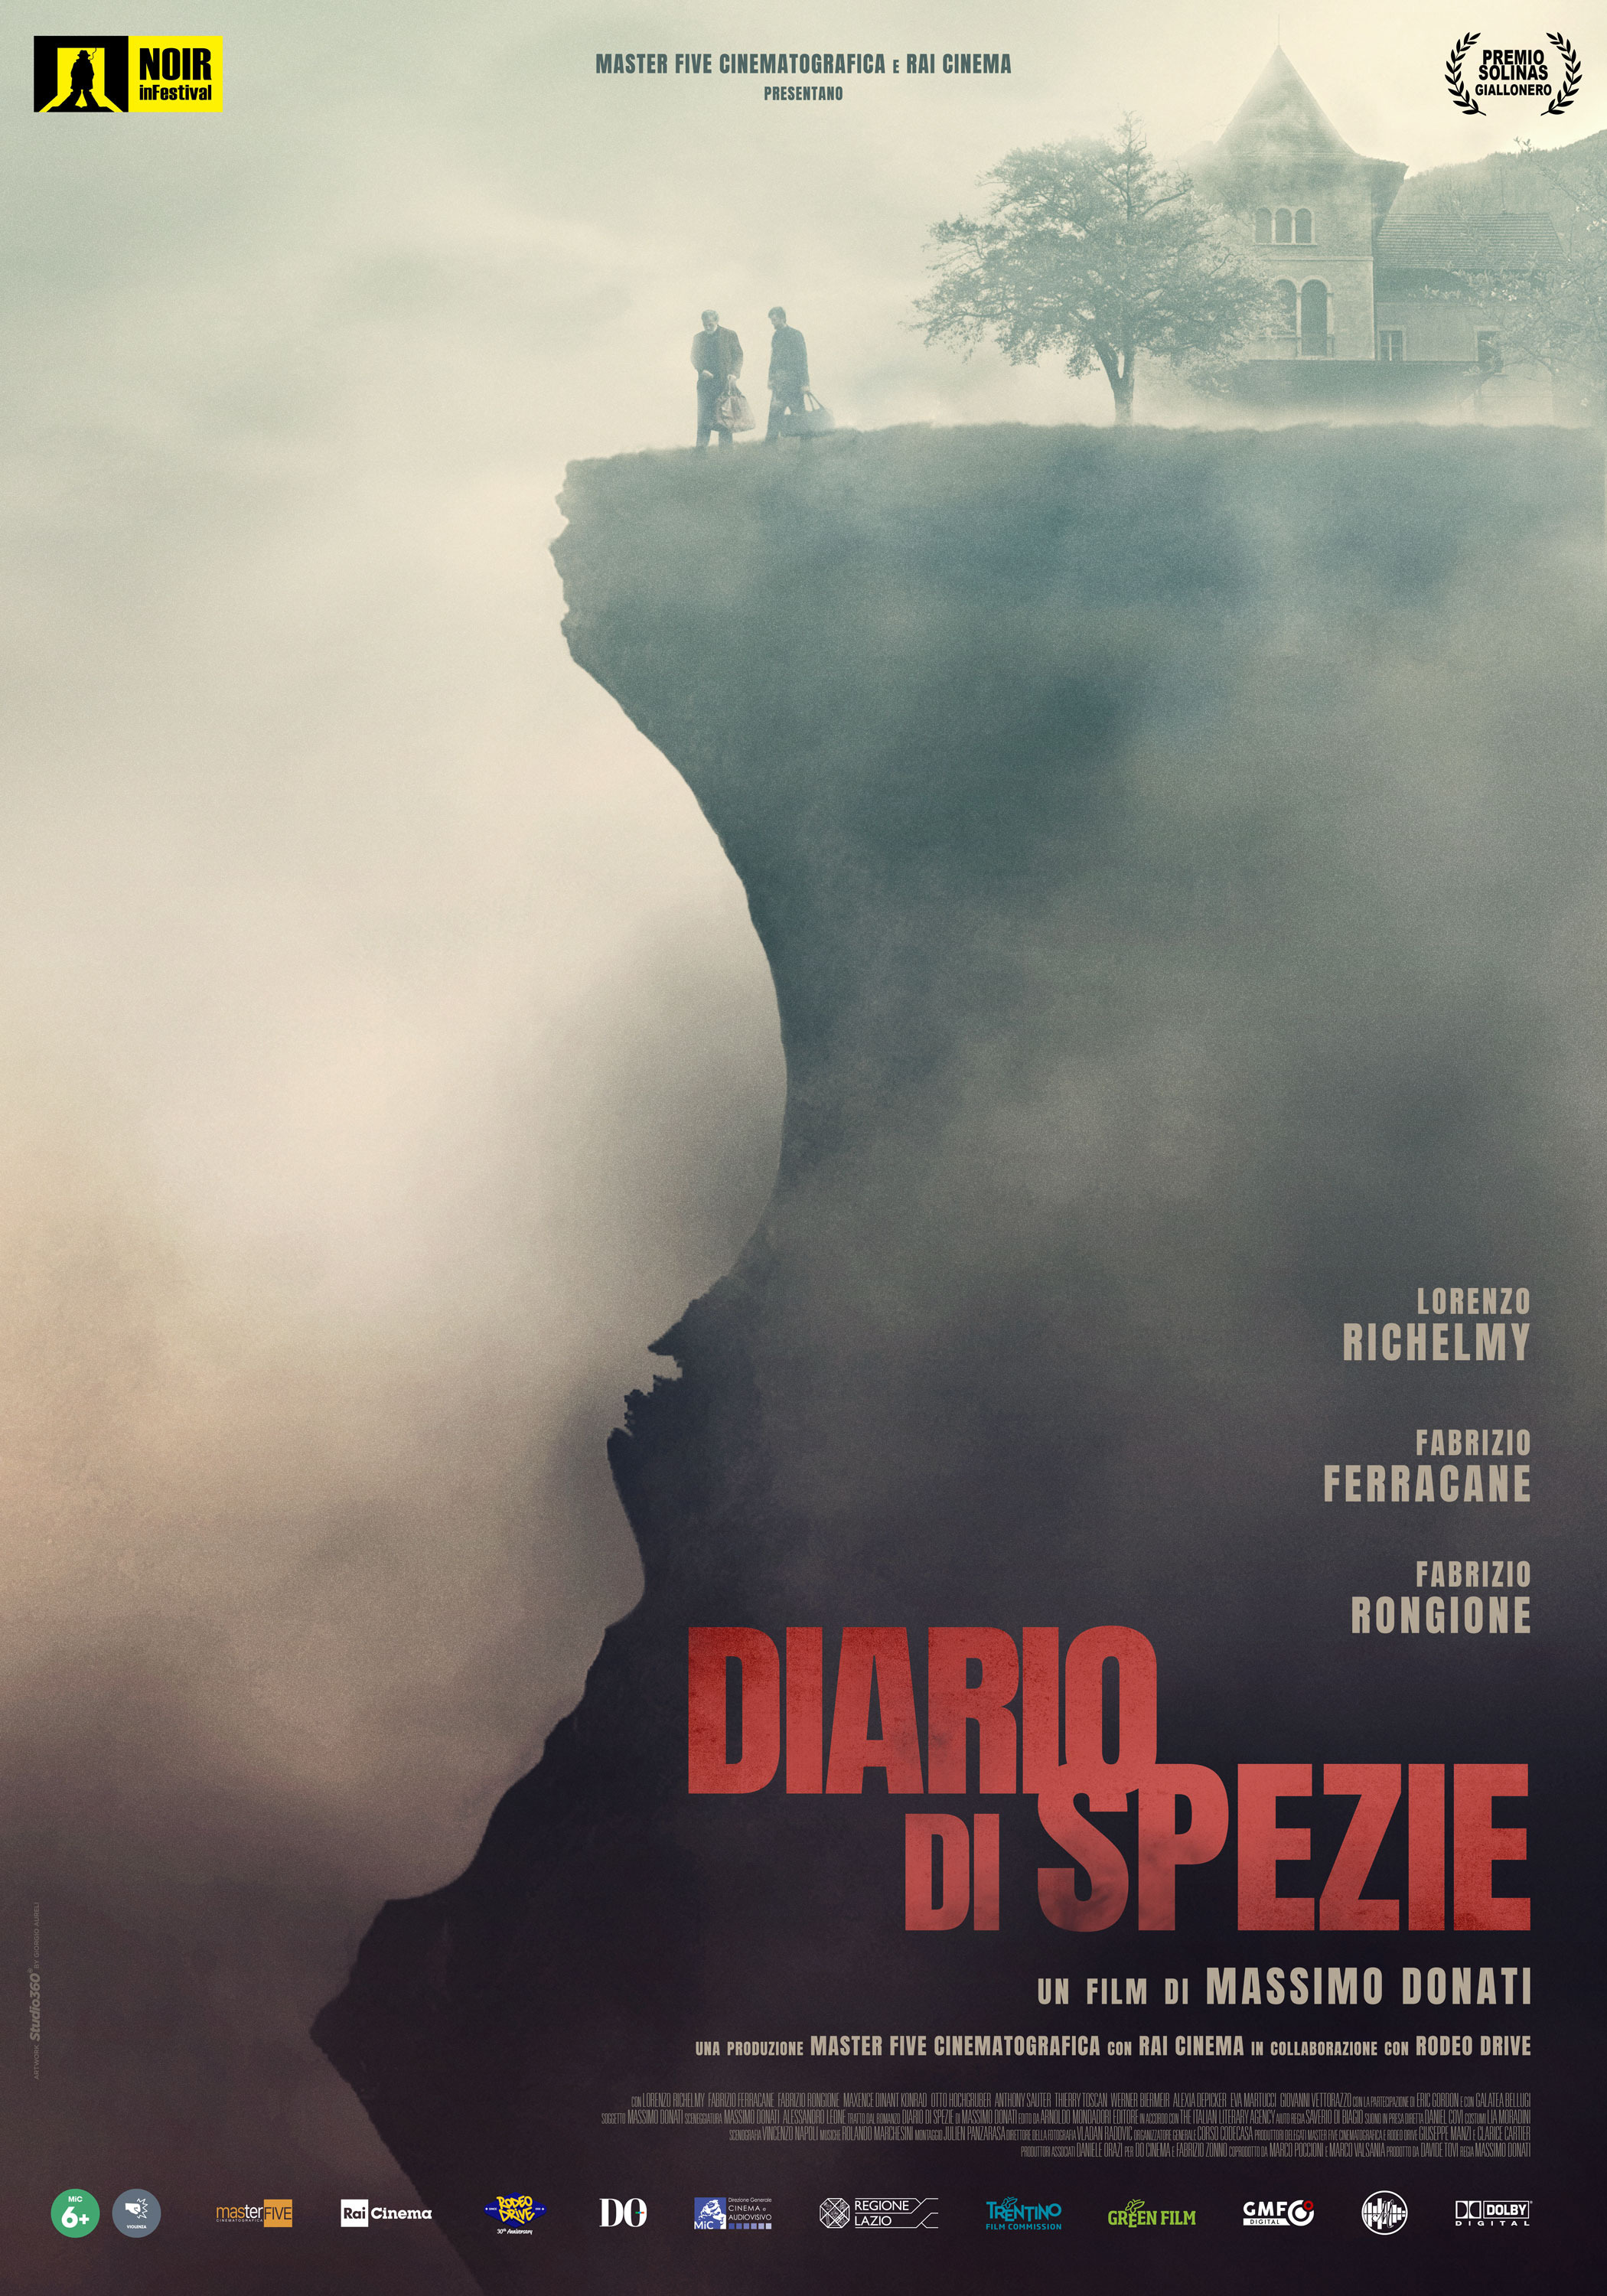 Mega Sized Movie Poster Image for Diario di spezie 